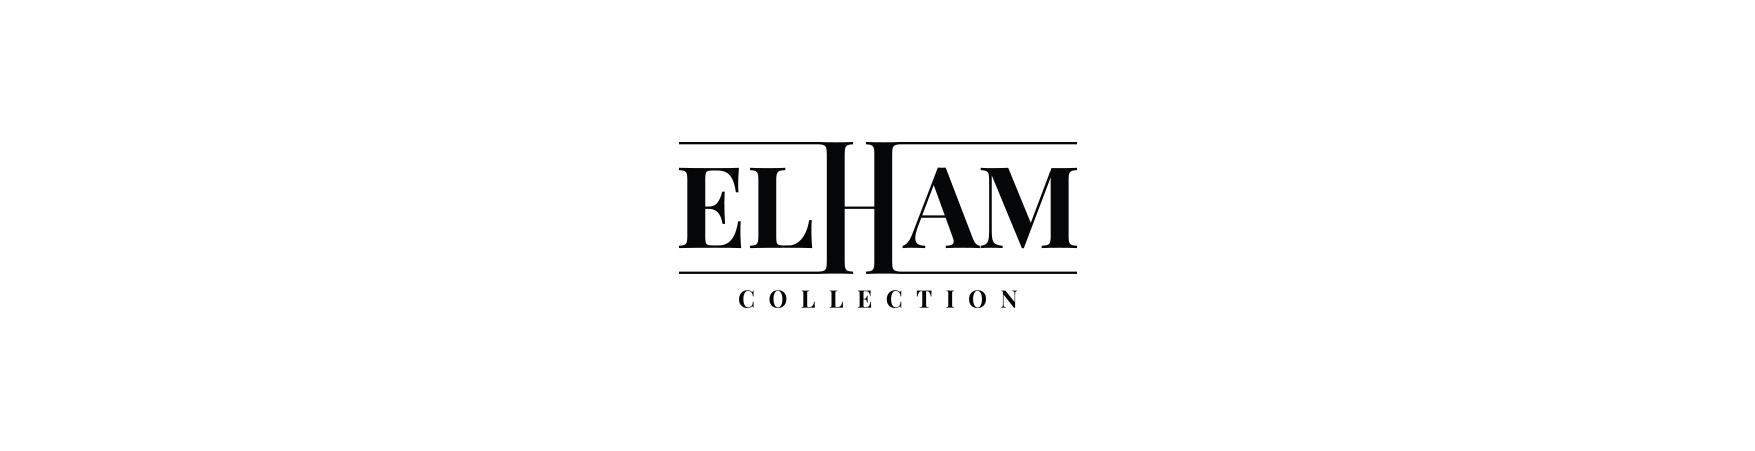 Elham Collection